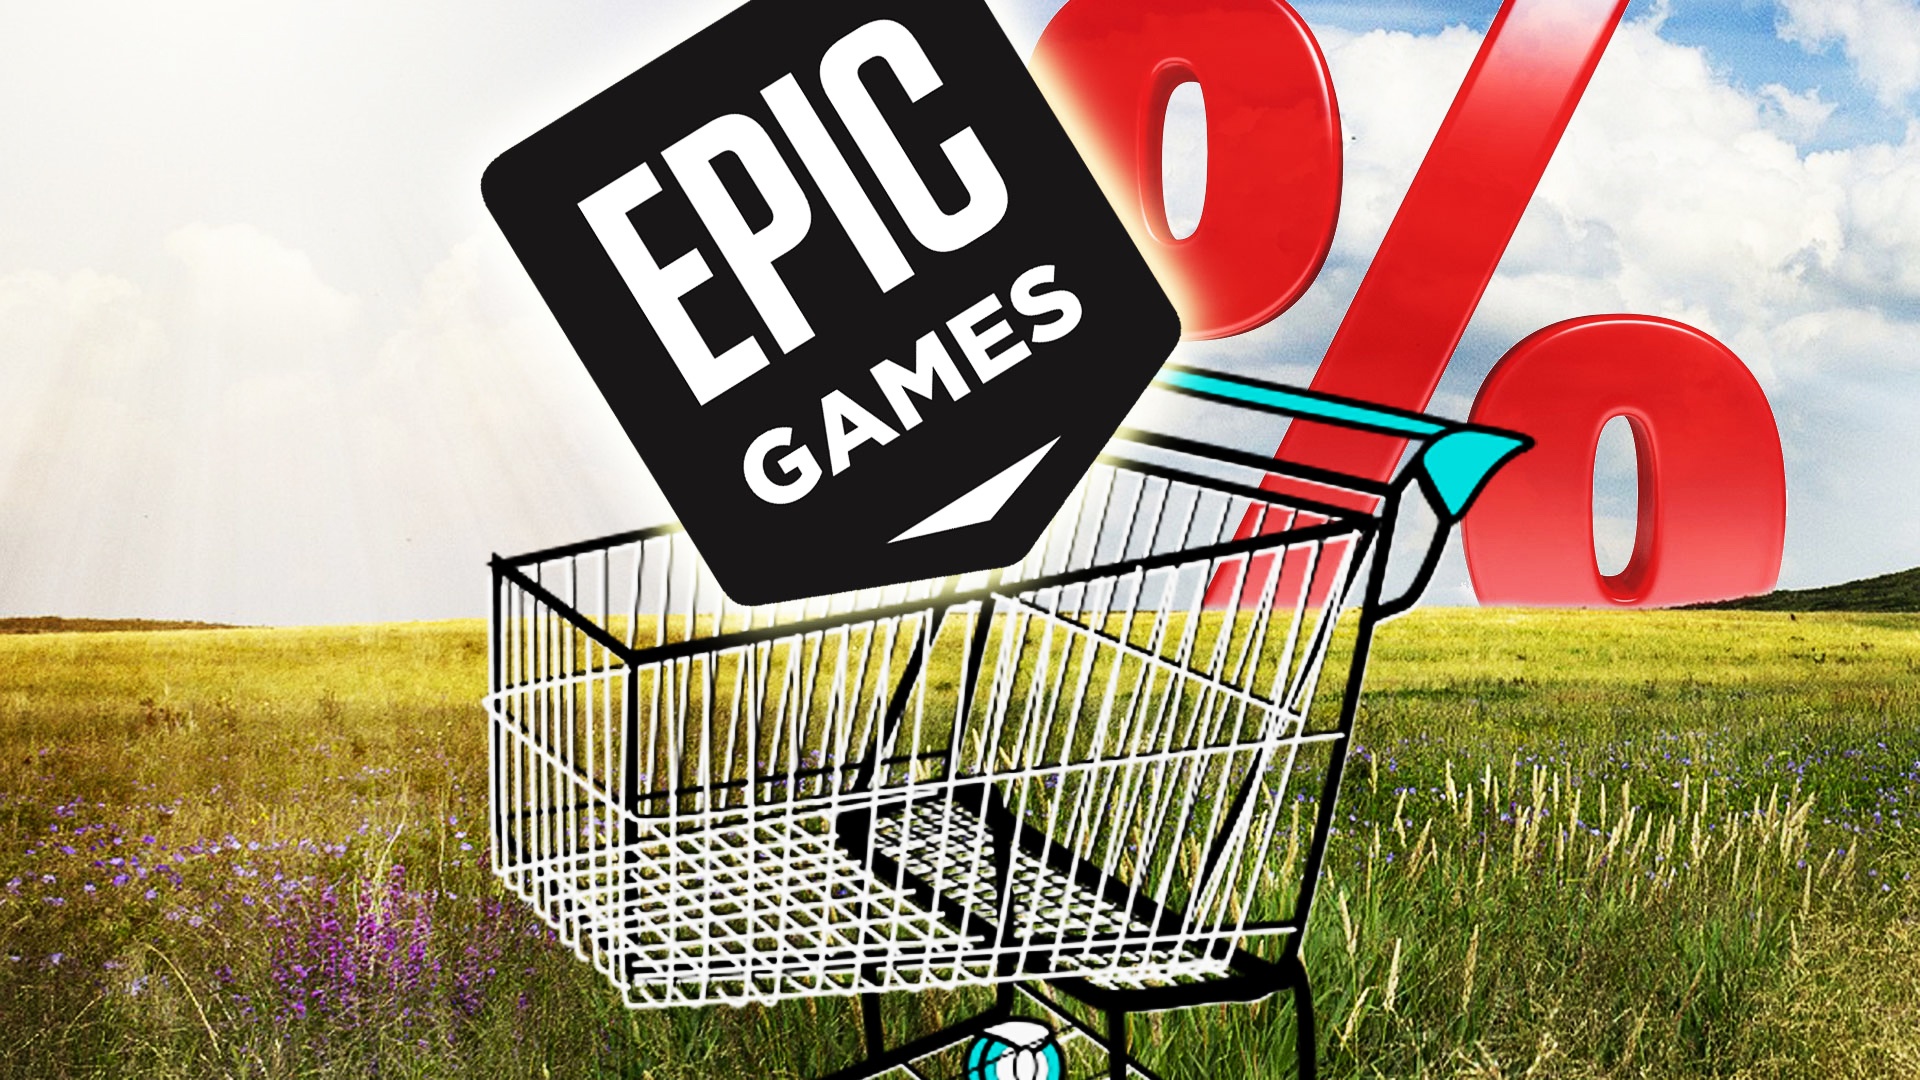 Arquivo de Epic Games Summer Sale - Quanto que vai custar